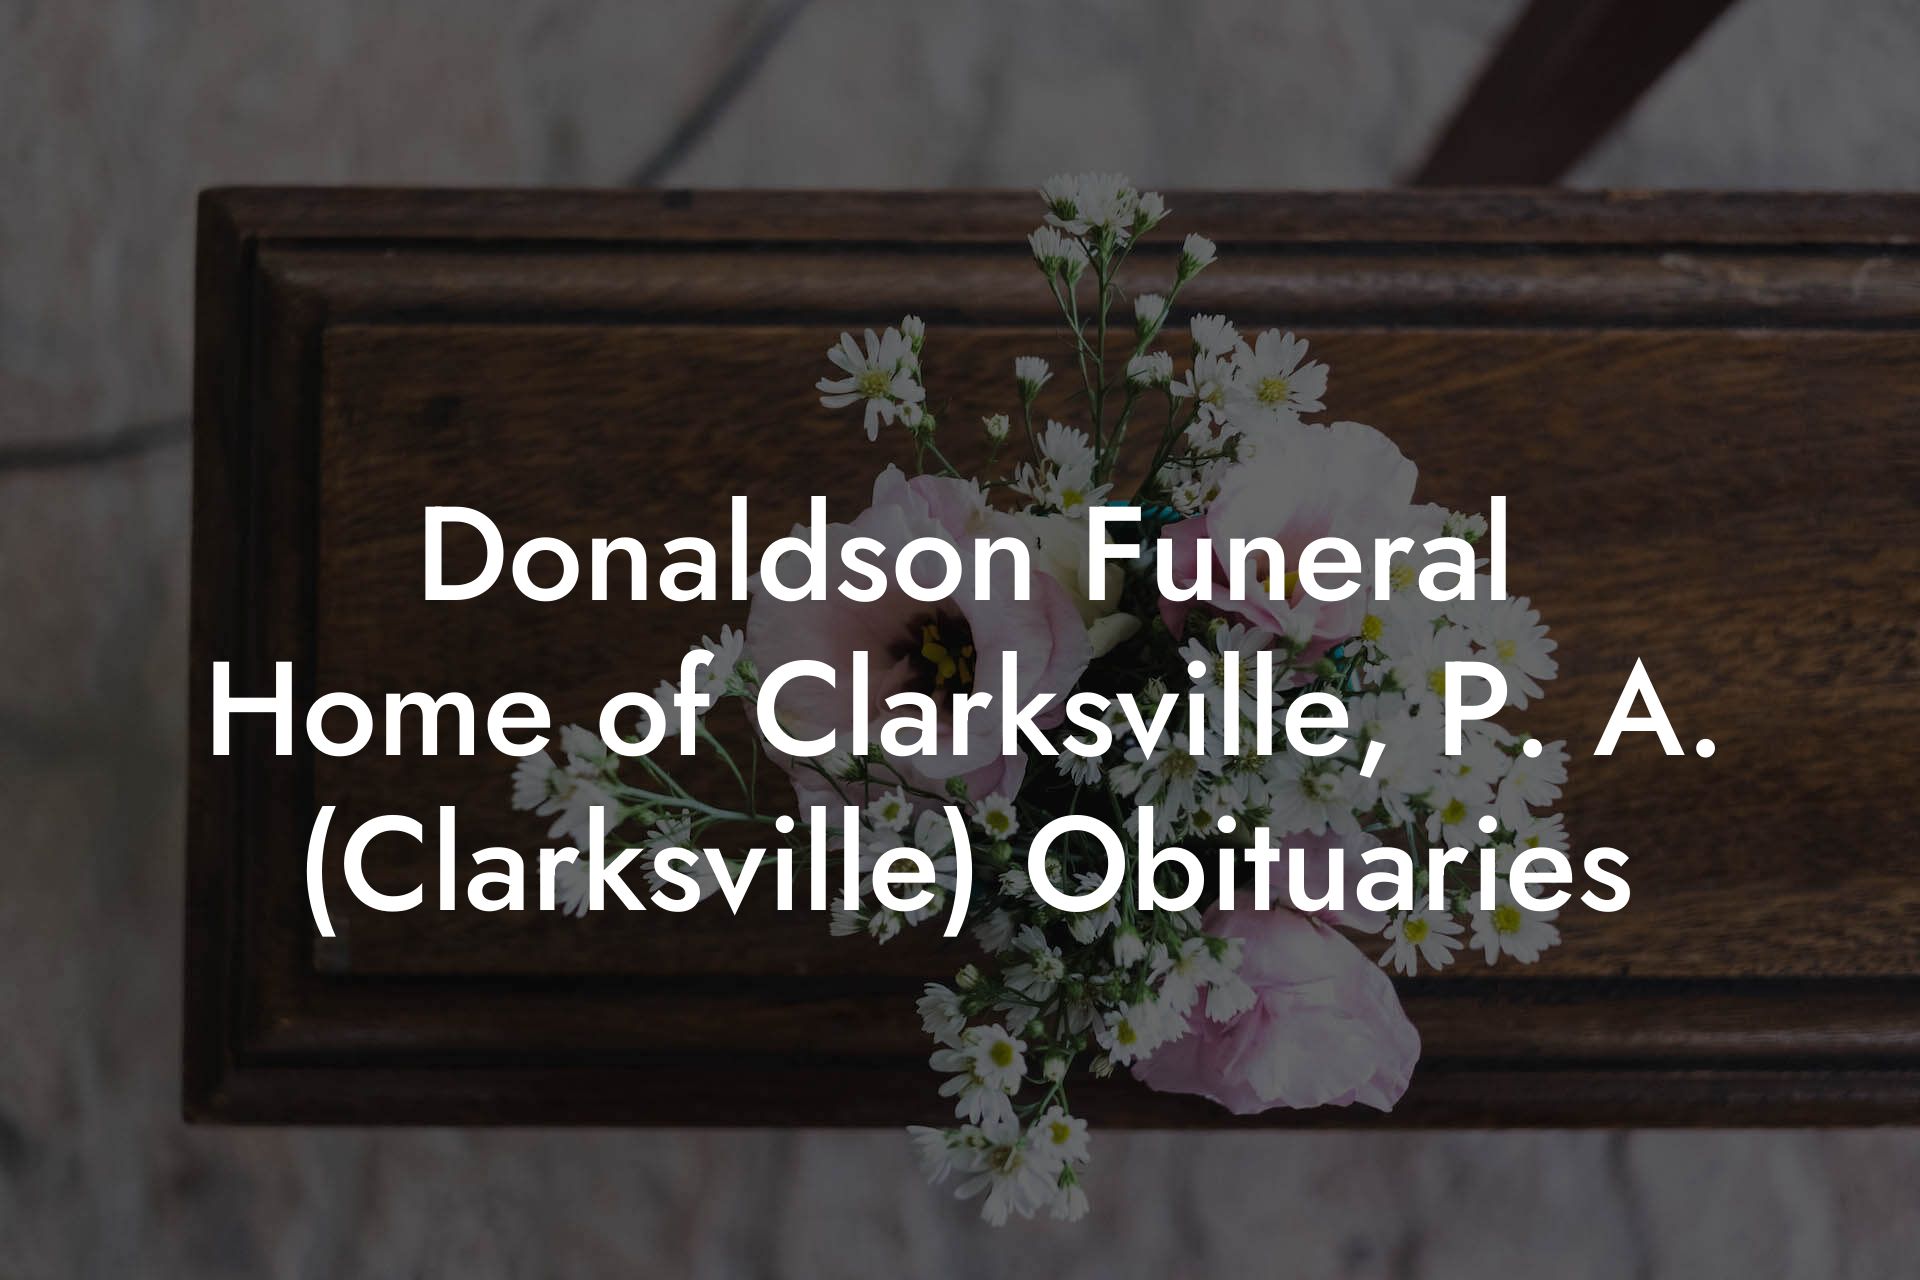 Donaldson Funeral Home of Clarksville, P. A. (Clarksville) Obituaries